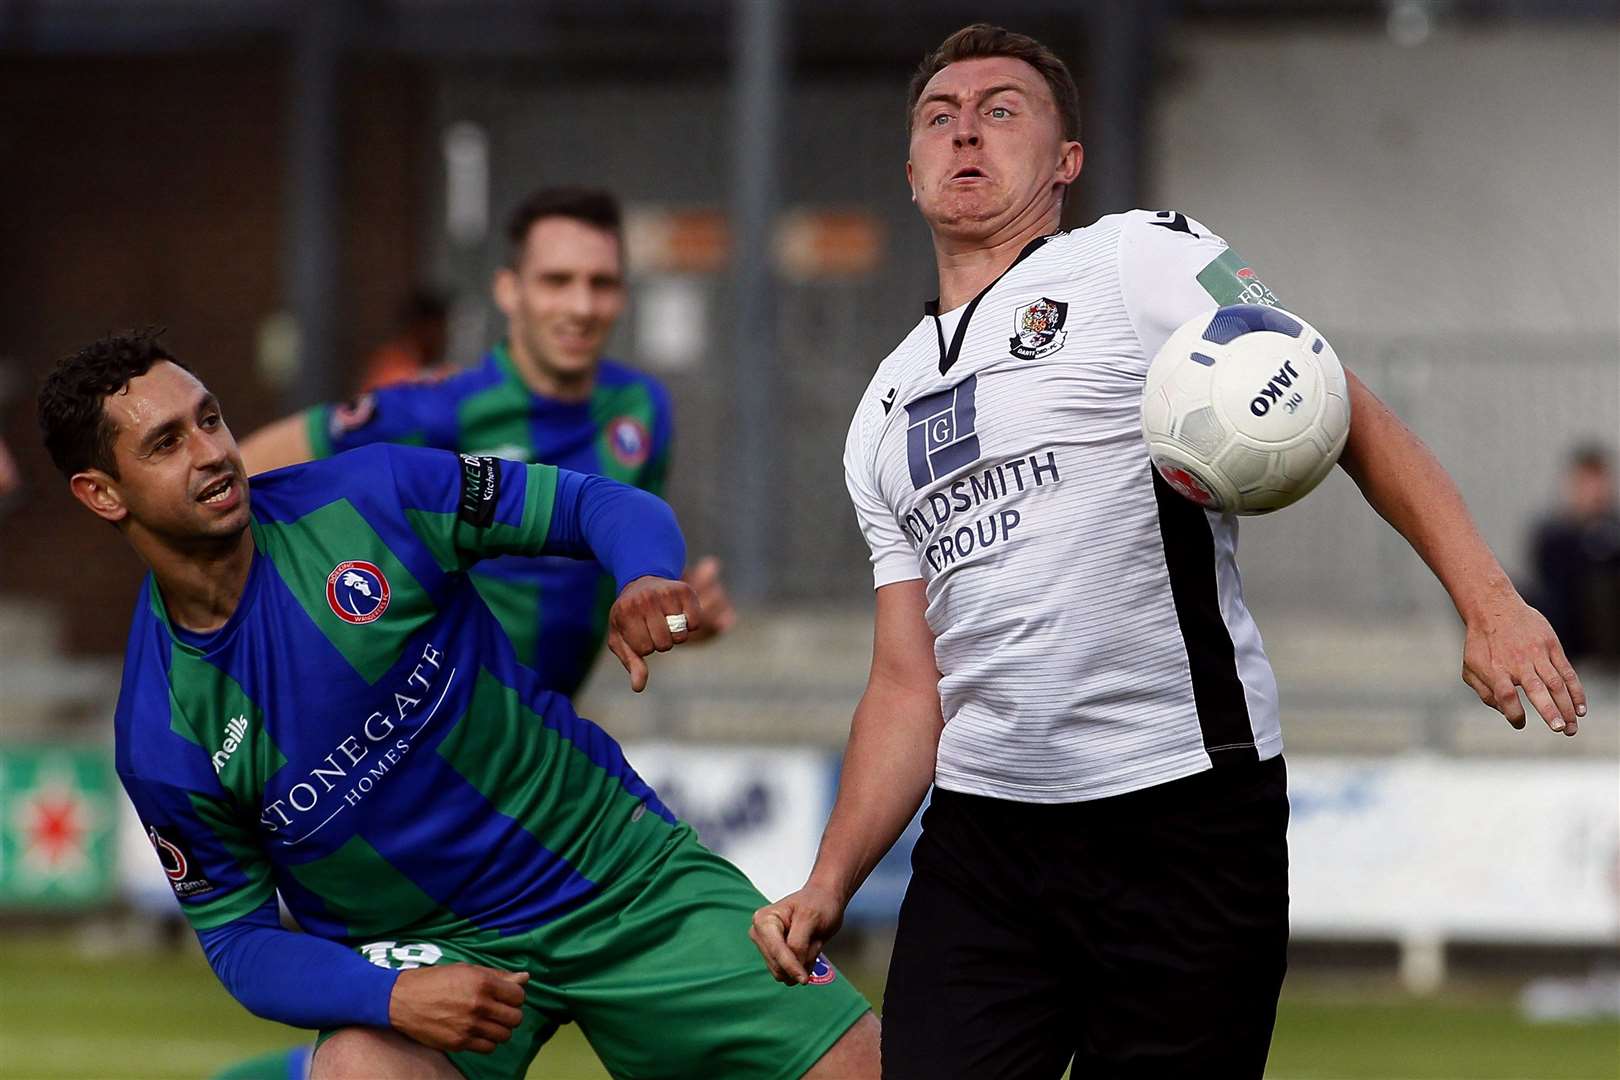 Dartford's Alex Flisher tries to bring the ball under control against Dorking on Saturday. Picture: Sean Aidan